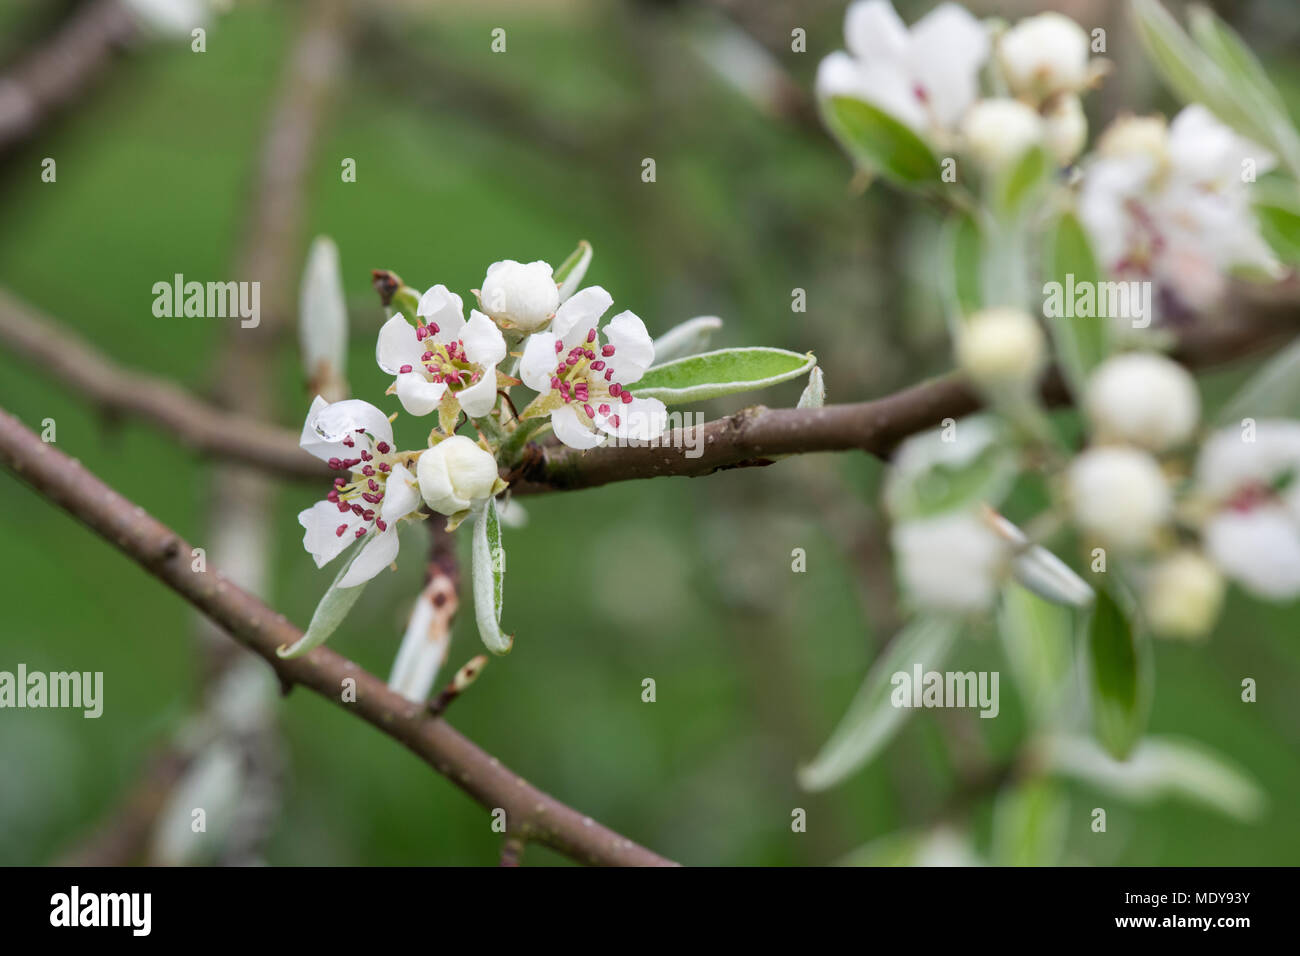 Pyrus elaeagnifolia kotschyana. Weeping Silver Pear tree blossom Stock Photo